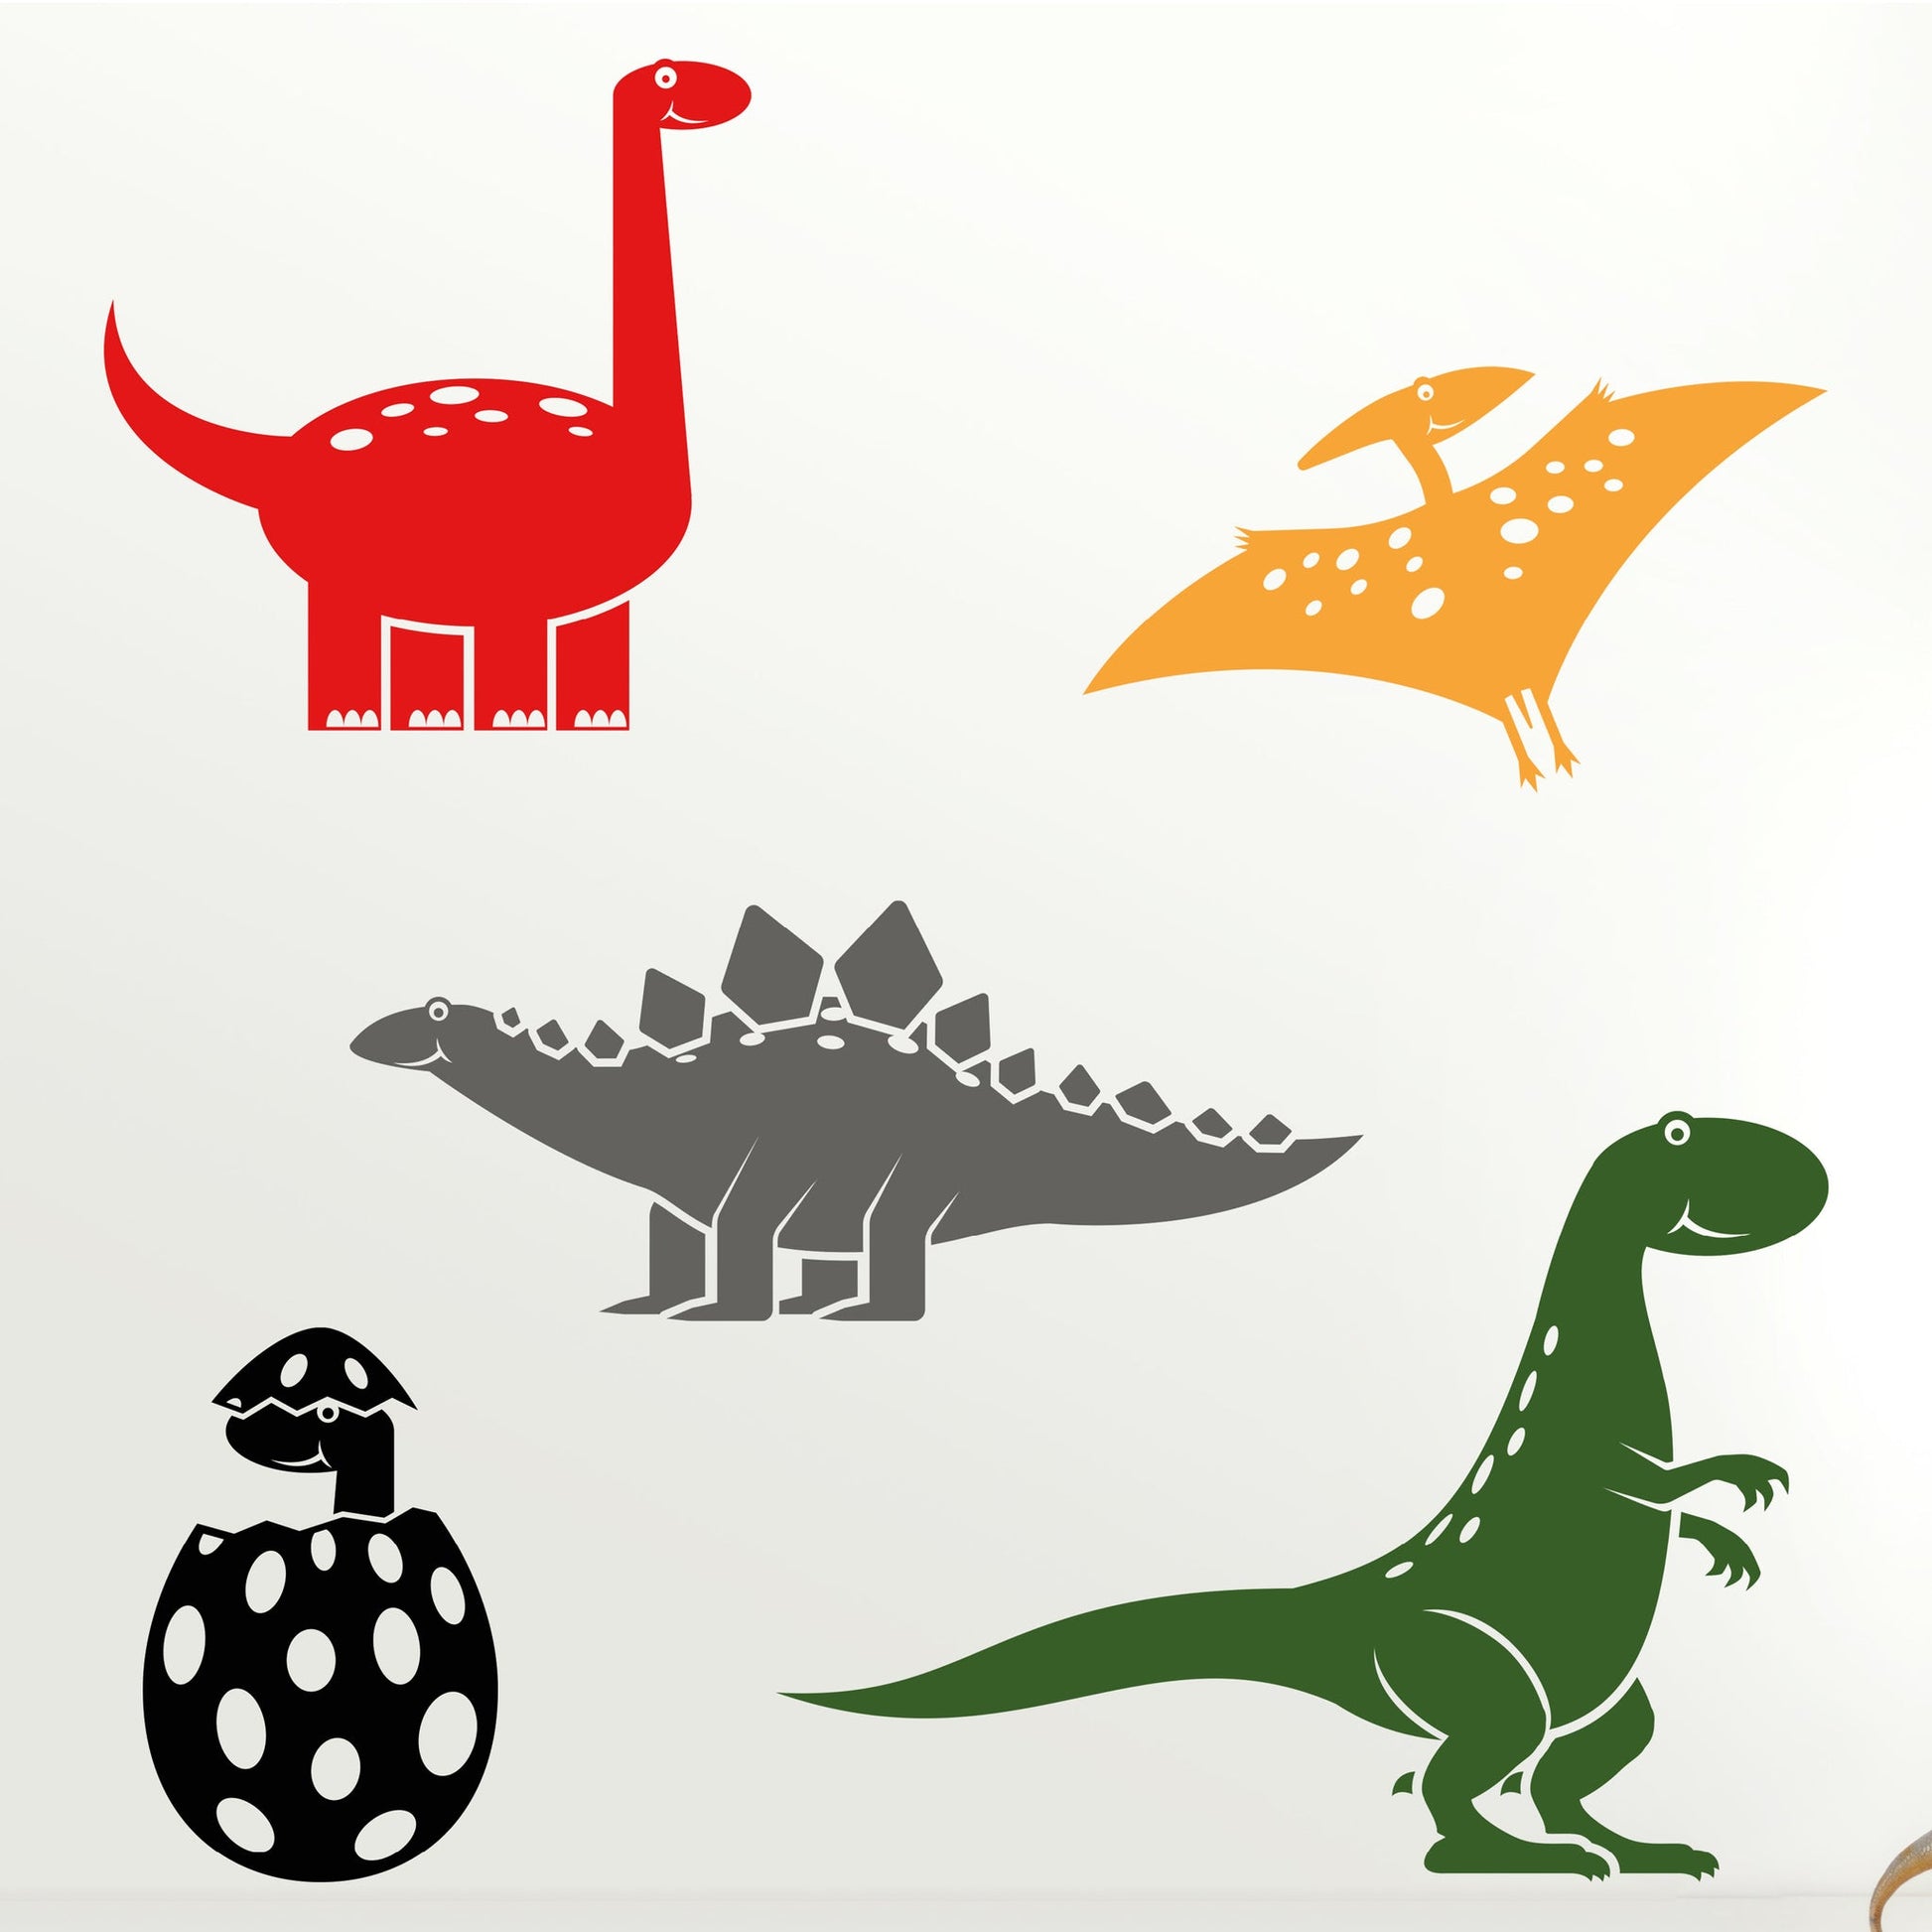 Dinosaur Running - Wall Decal Sticker